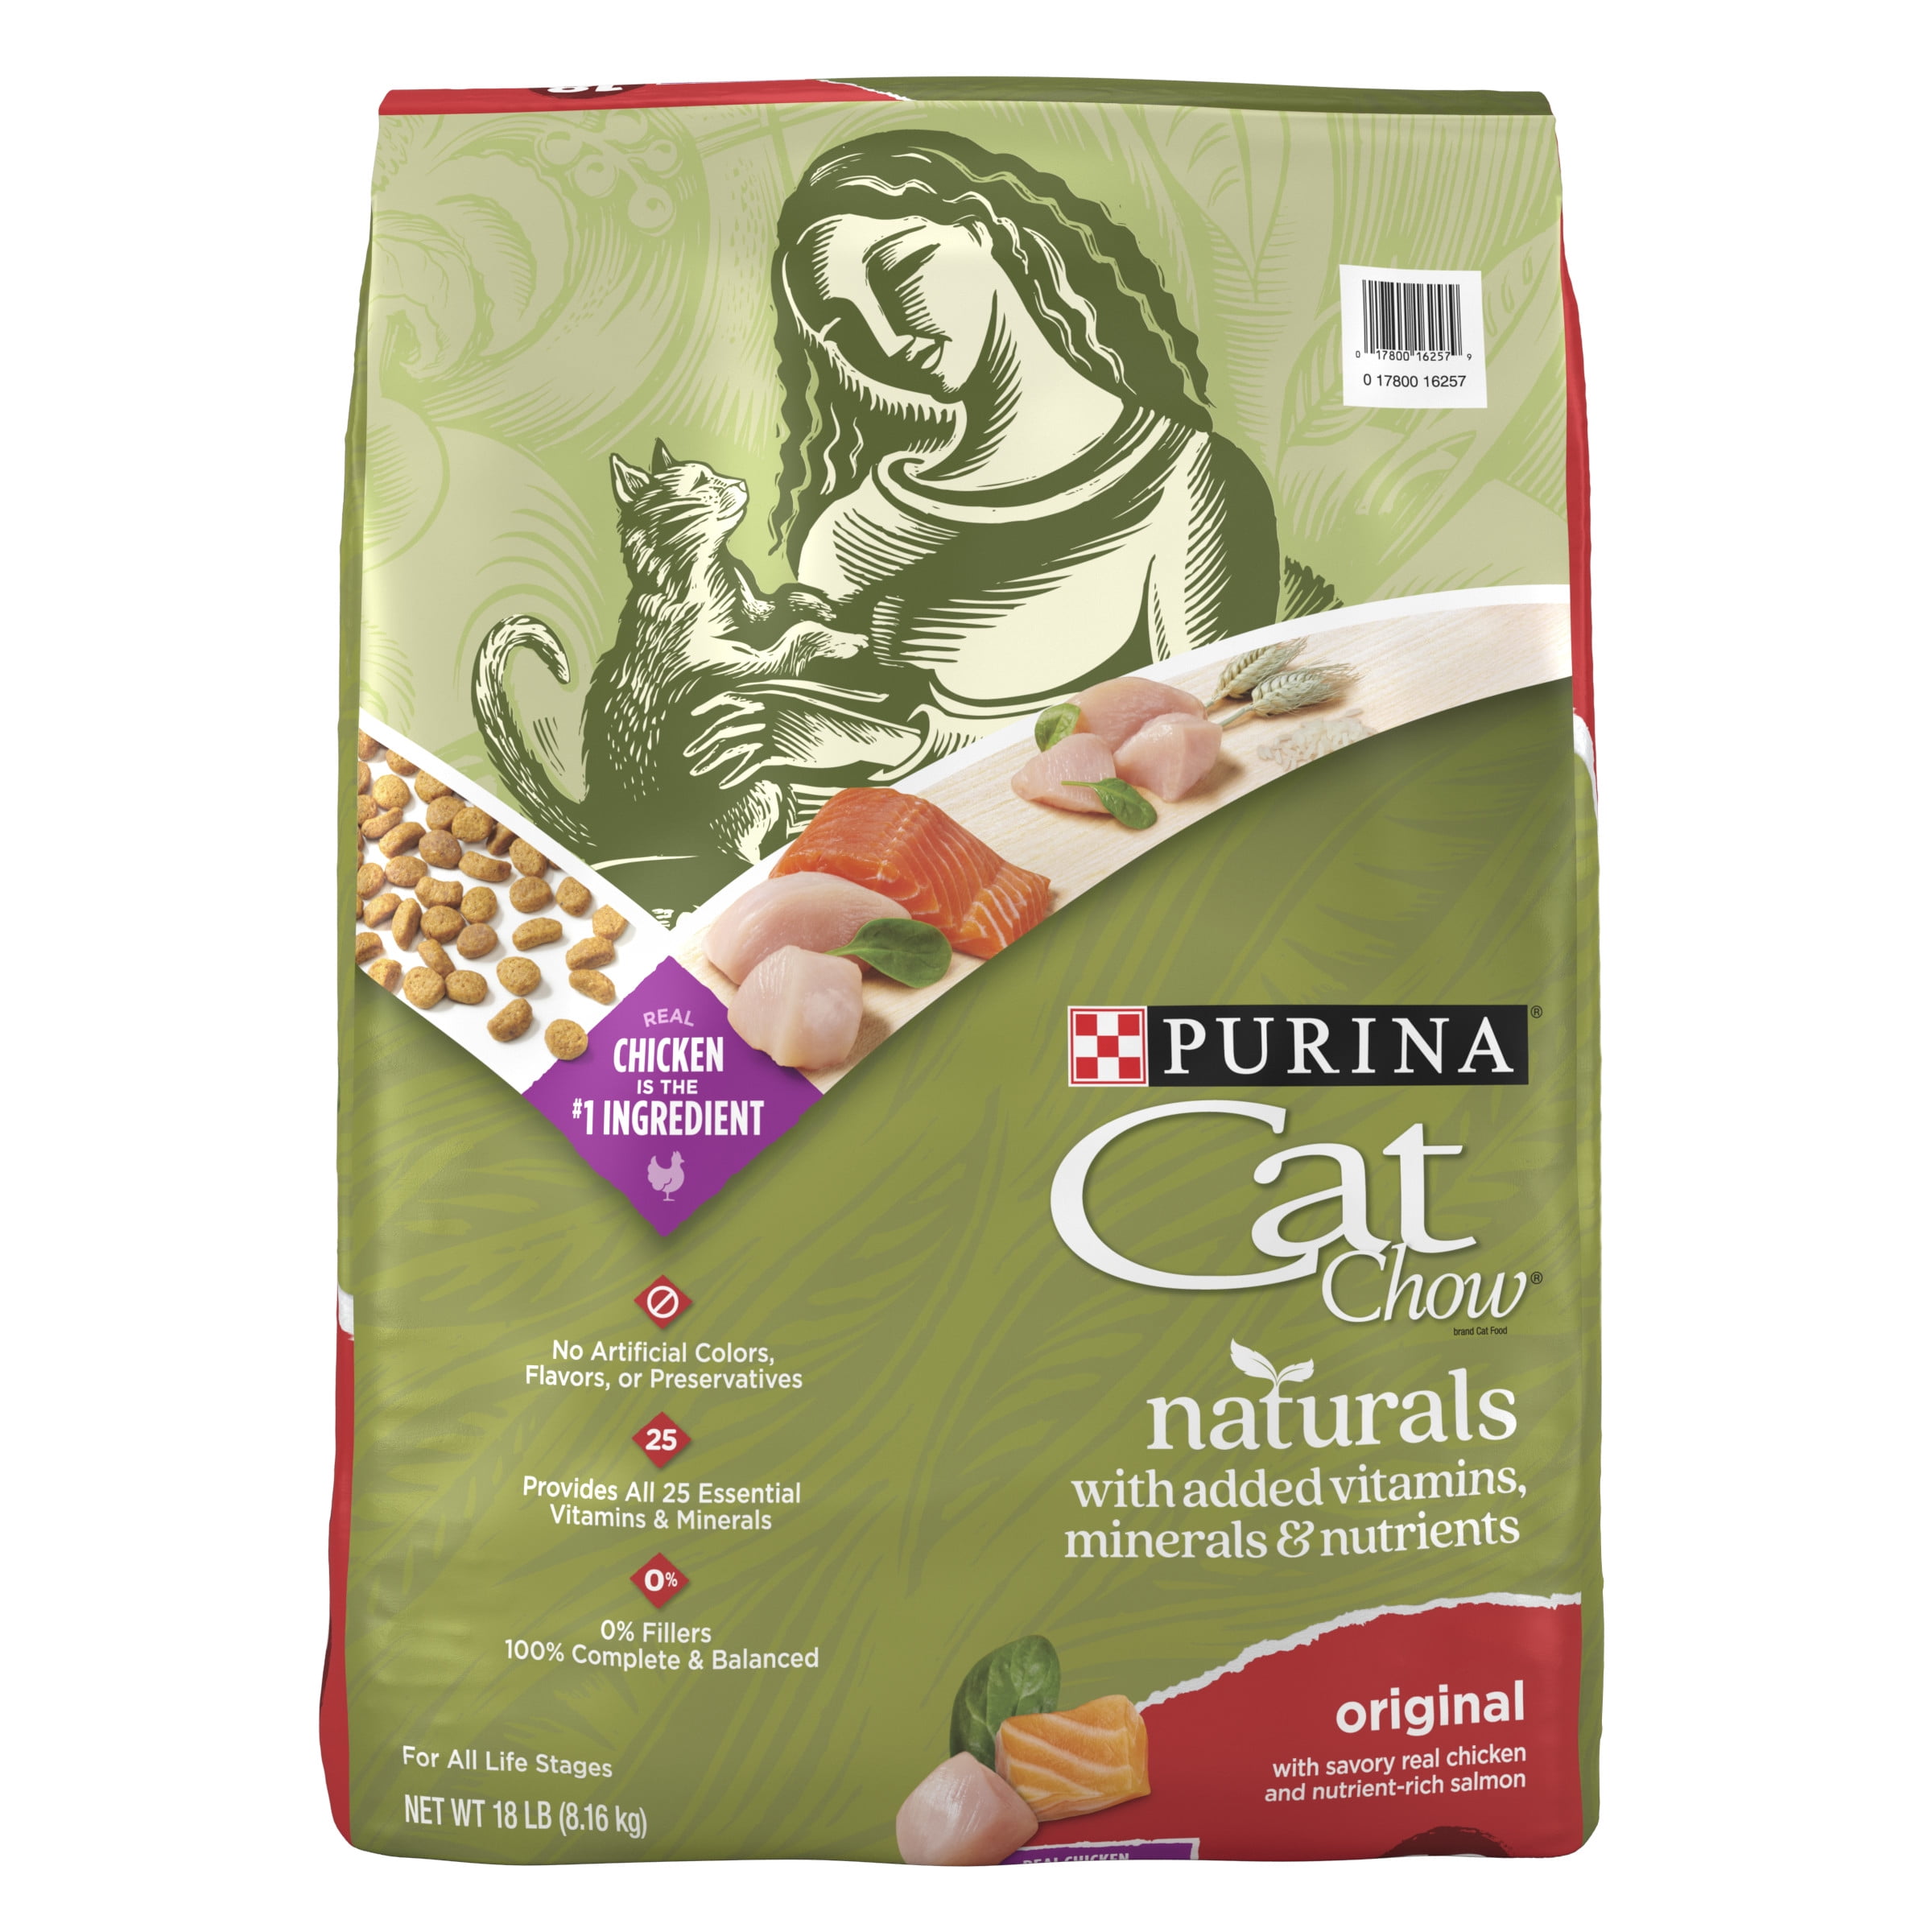 Purina Cat Chow Naturals Chicken & Salmon Original Dry Cat Food, 18 lb Bag